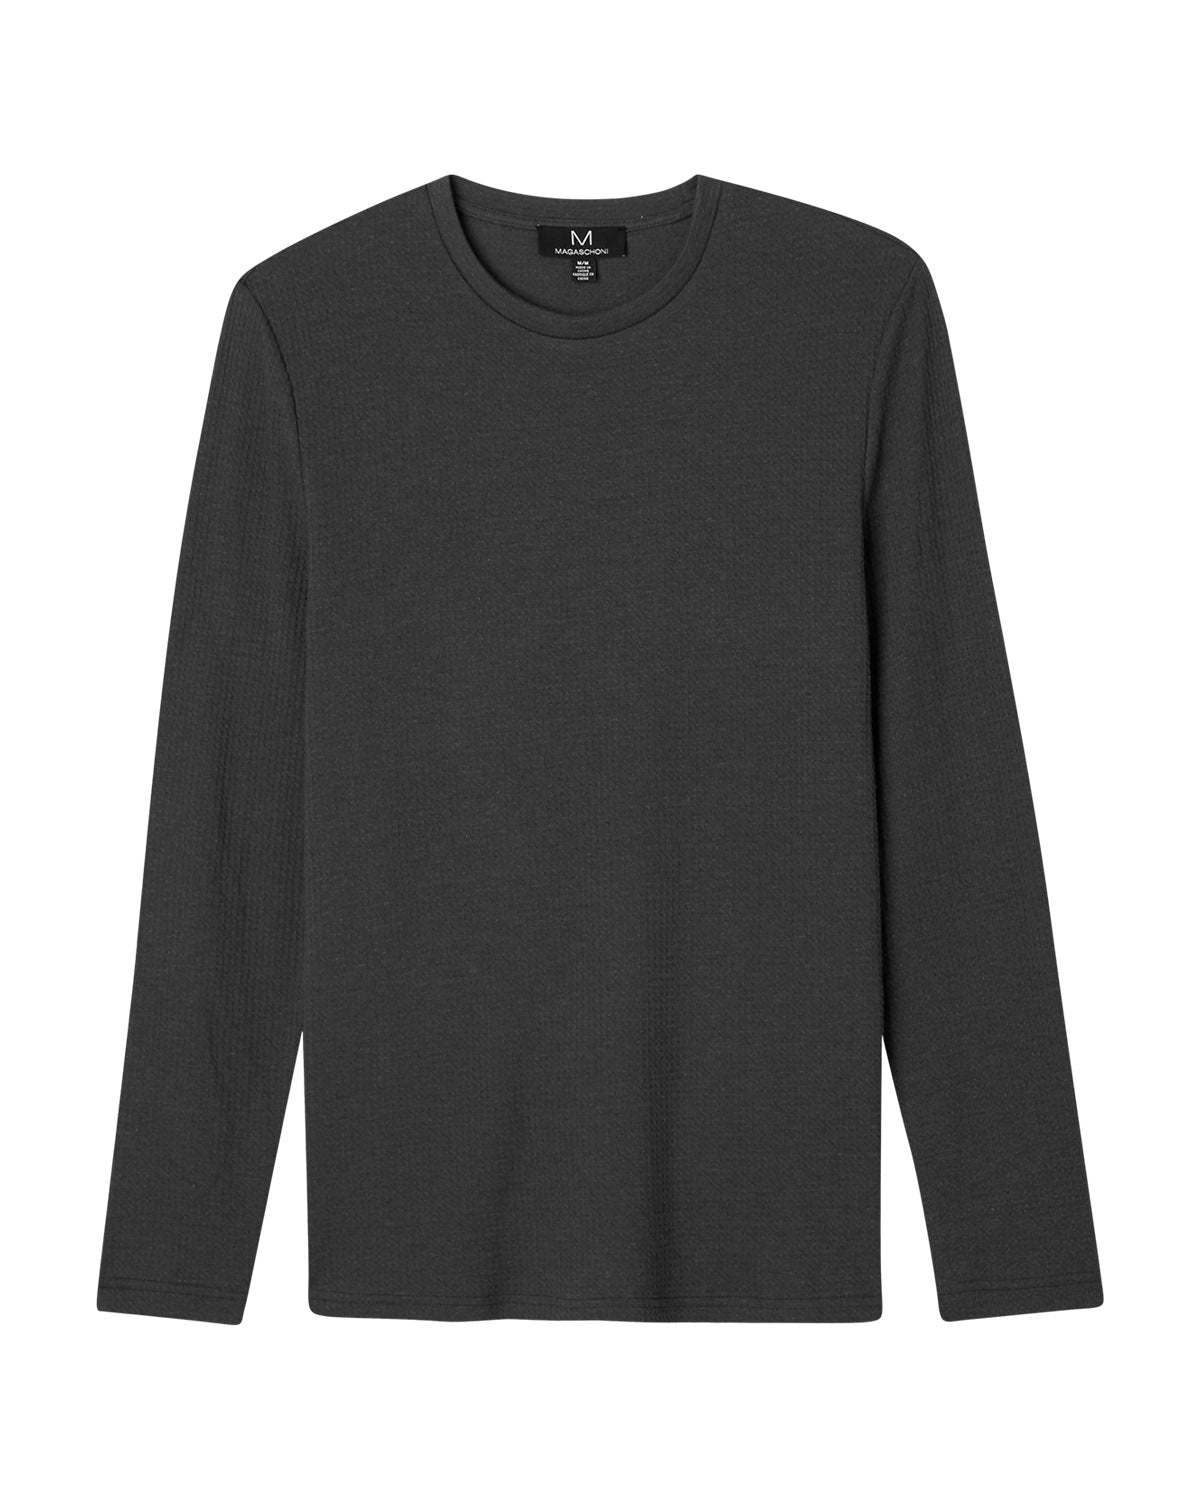 Men's Cotton-Modal Knit Pullover Sweater, Charcoal | M Magaschoni Men's